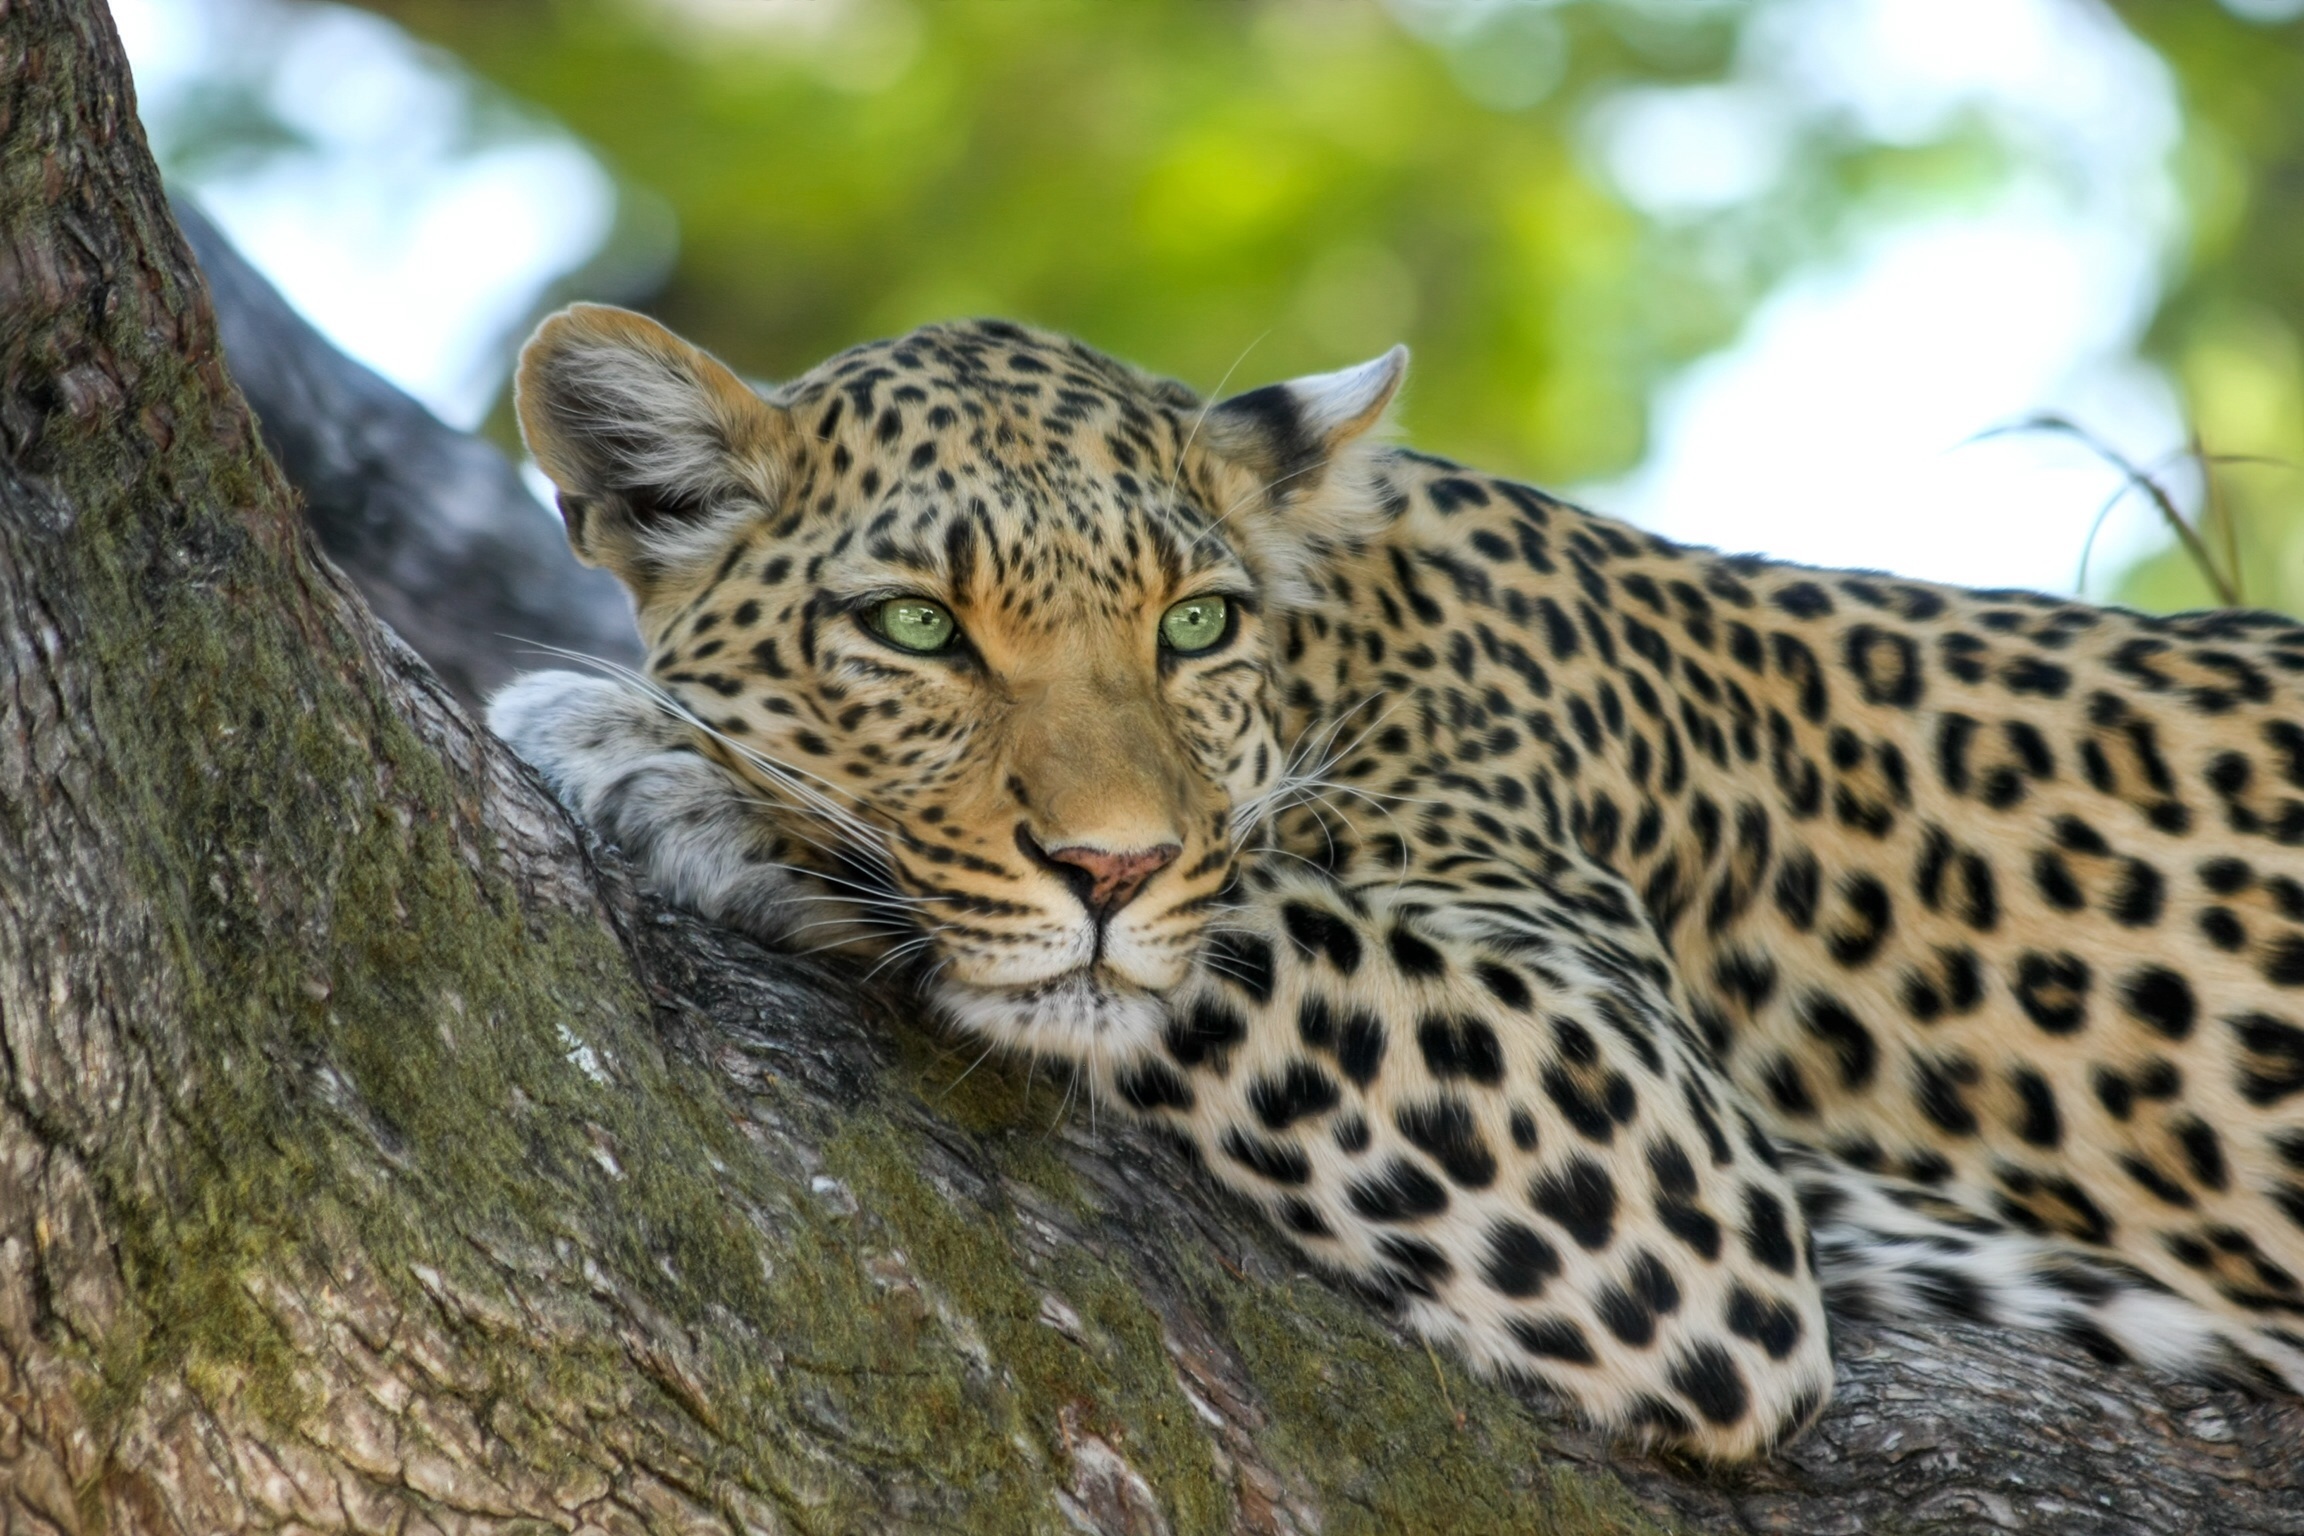 Leopardo africano